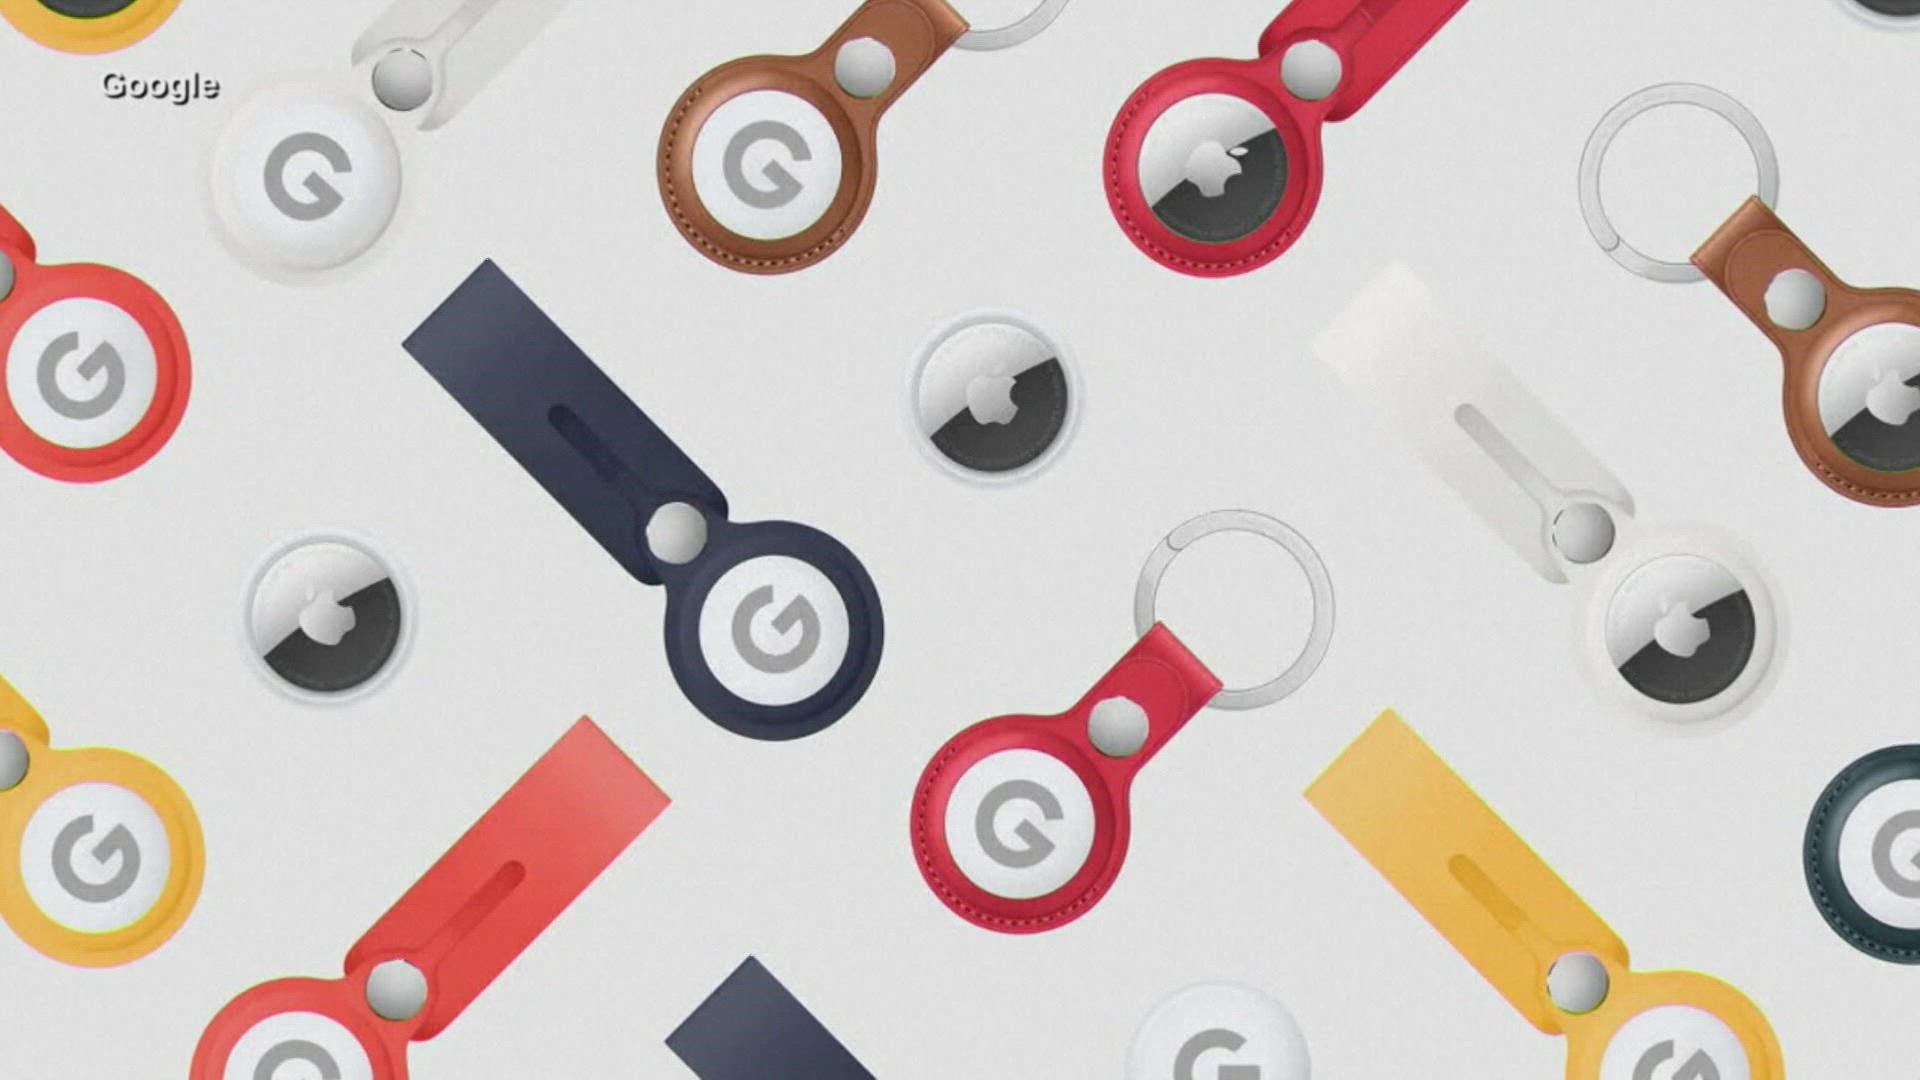 watch manufacturers logos - Google Search